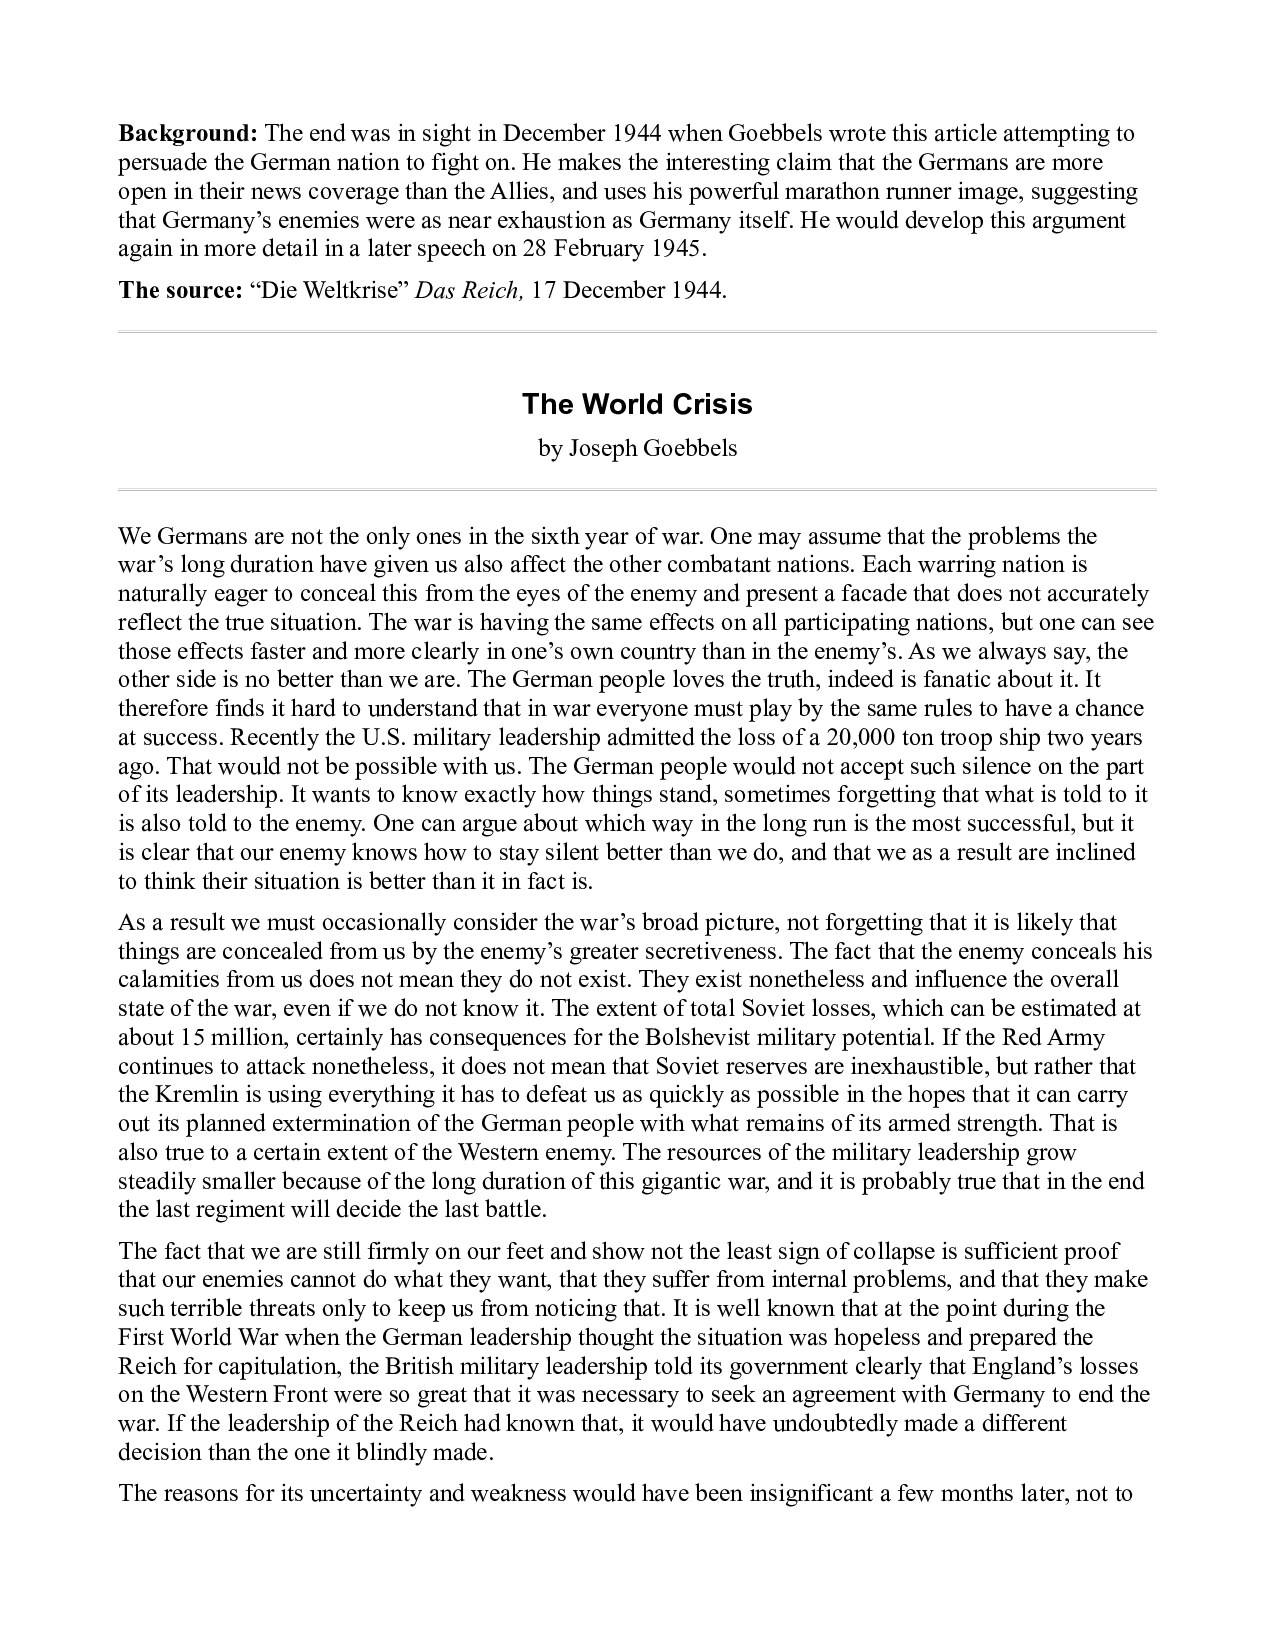 The World Crisis - Goebbels